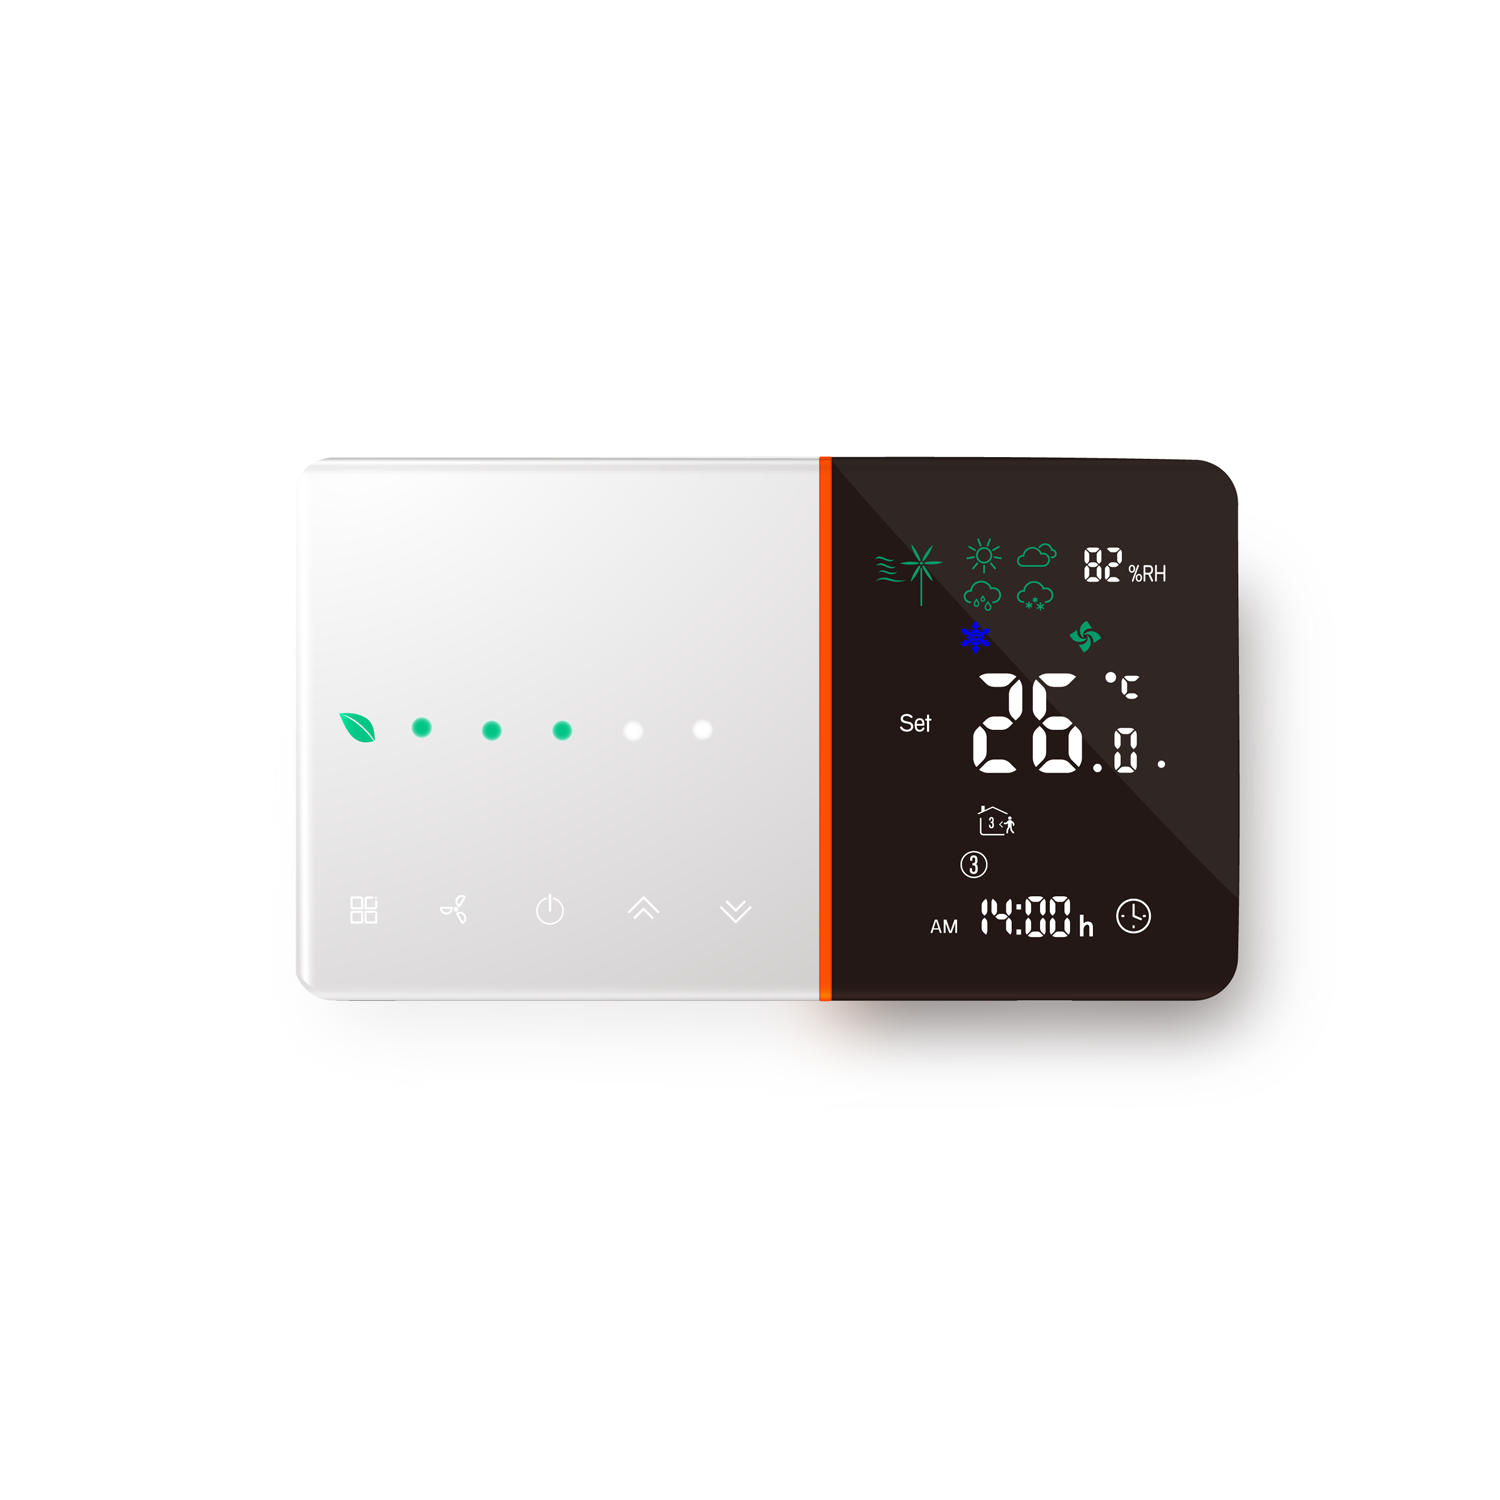 Becasmart BAC-005 Series Room Smart Thermostat